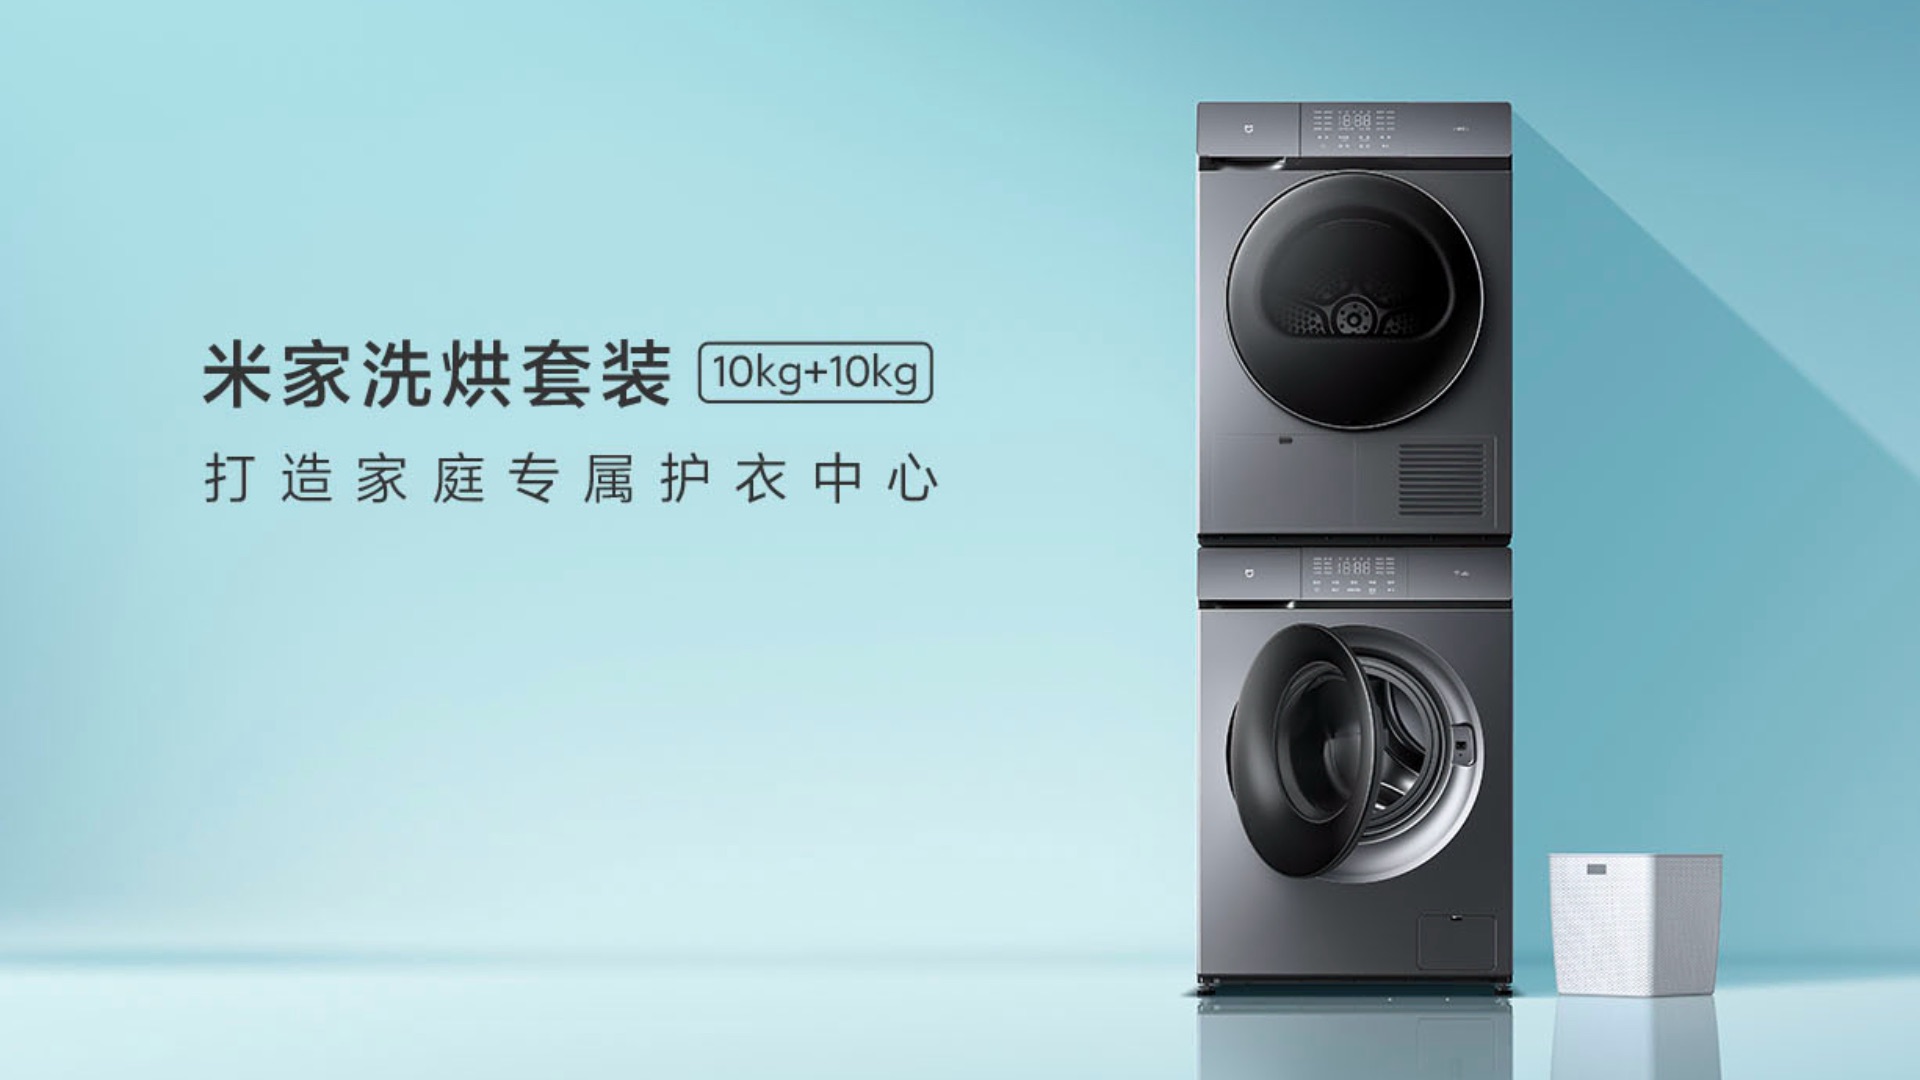 Стиральная машина сяоми. Стиральная и сушильная машина Xiaomi. Xiaomi Mijia стиральная машина 2022. Xiaomi Mijia стиральная и сушильная. Стиральная машина Xiaomi с сушкой.